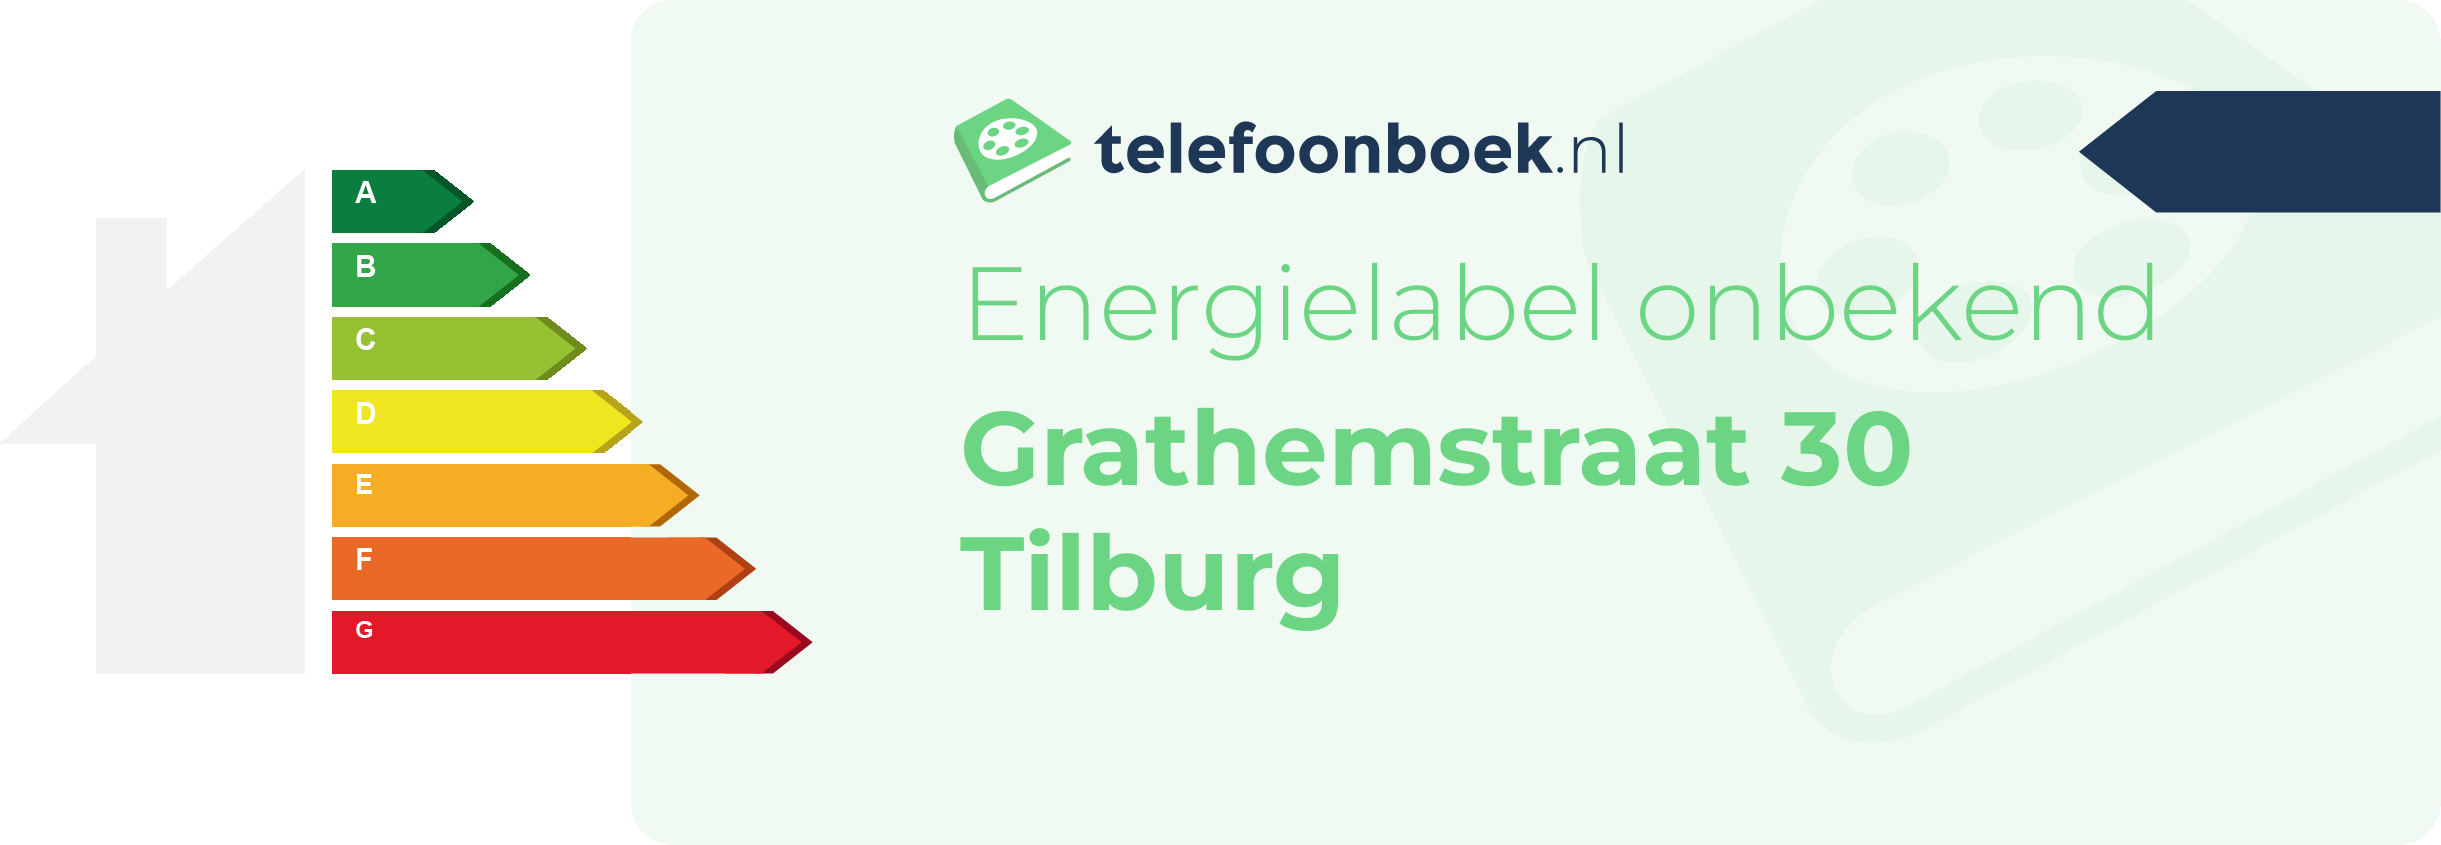 Energielabel Grathemstraat 30 Tilburg